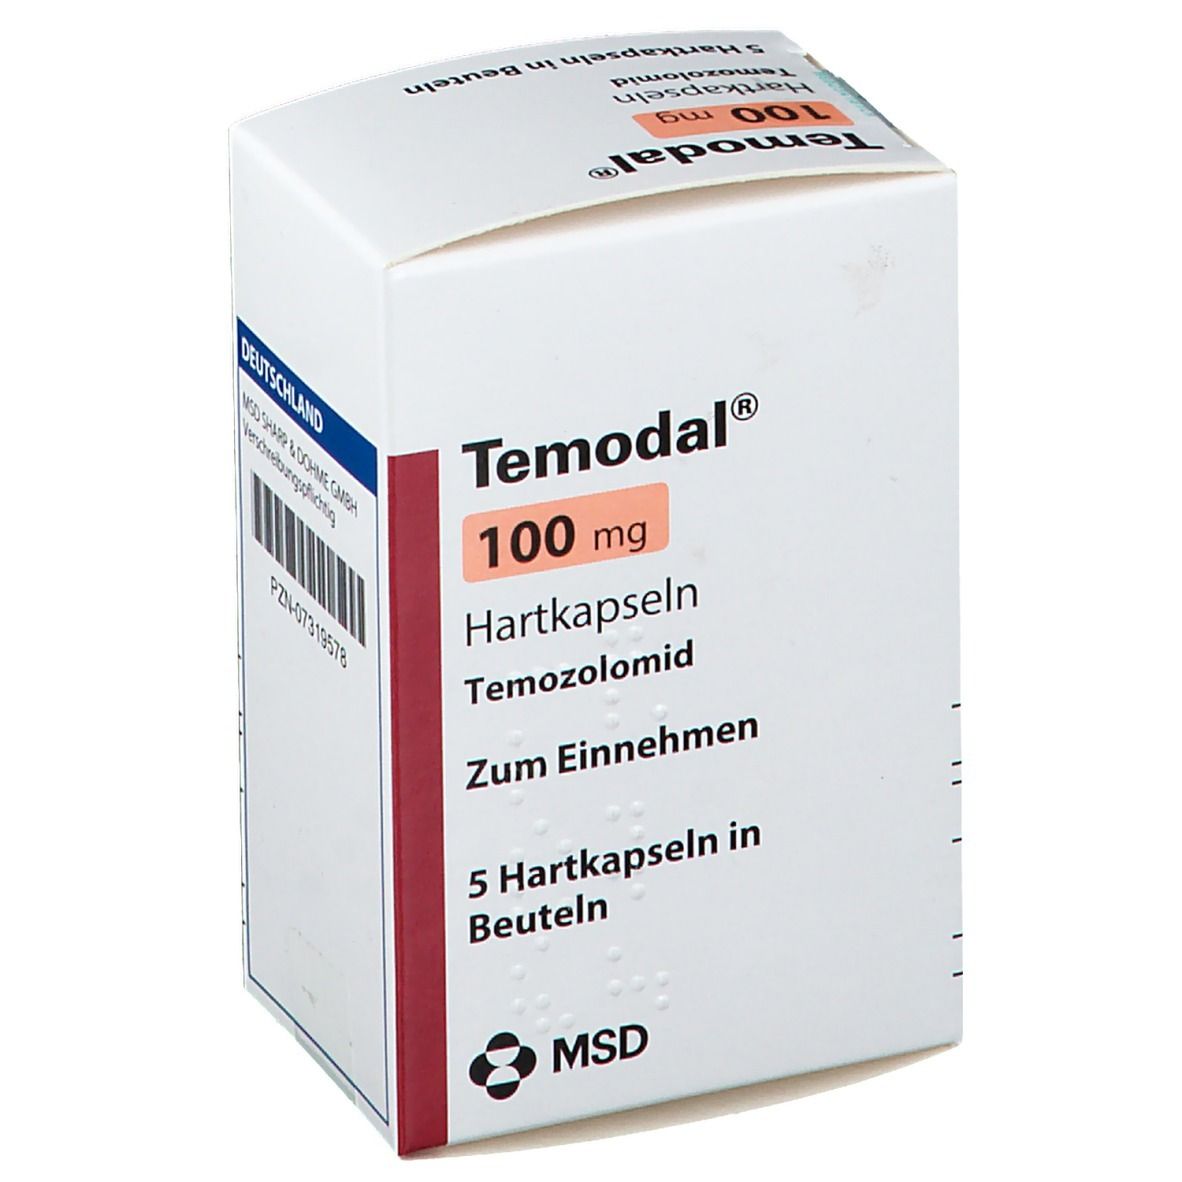 Temodal® 100 mg